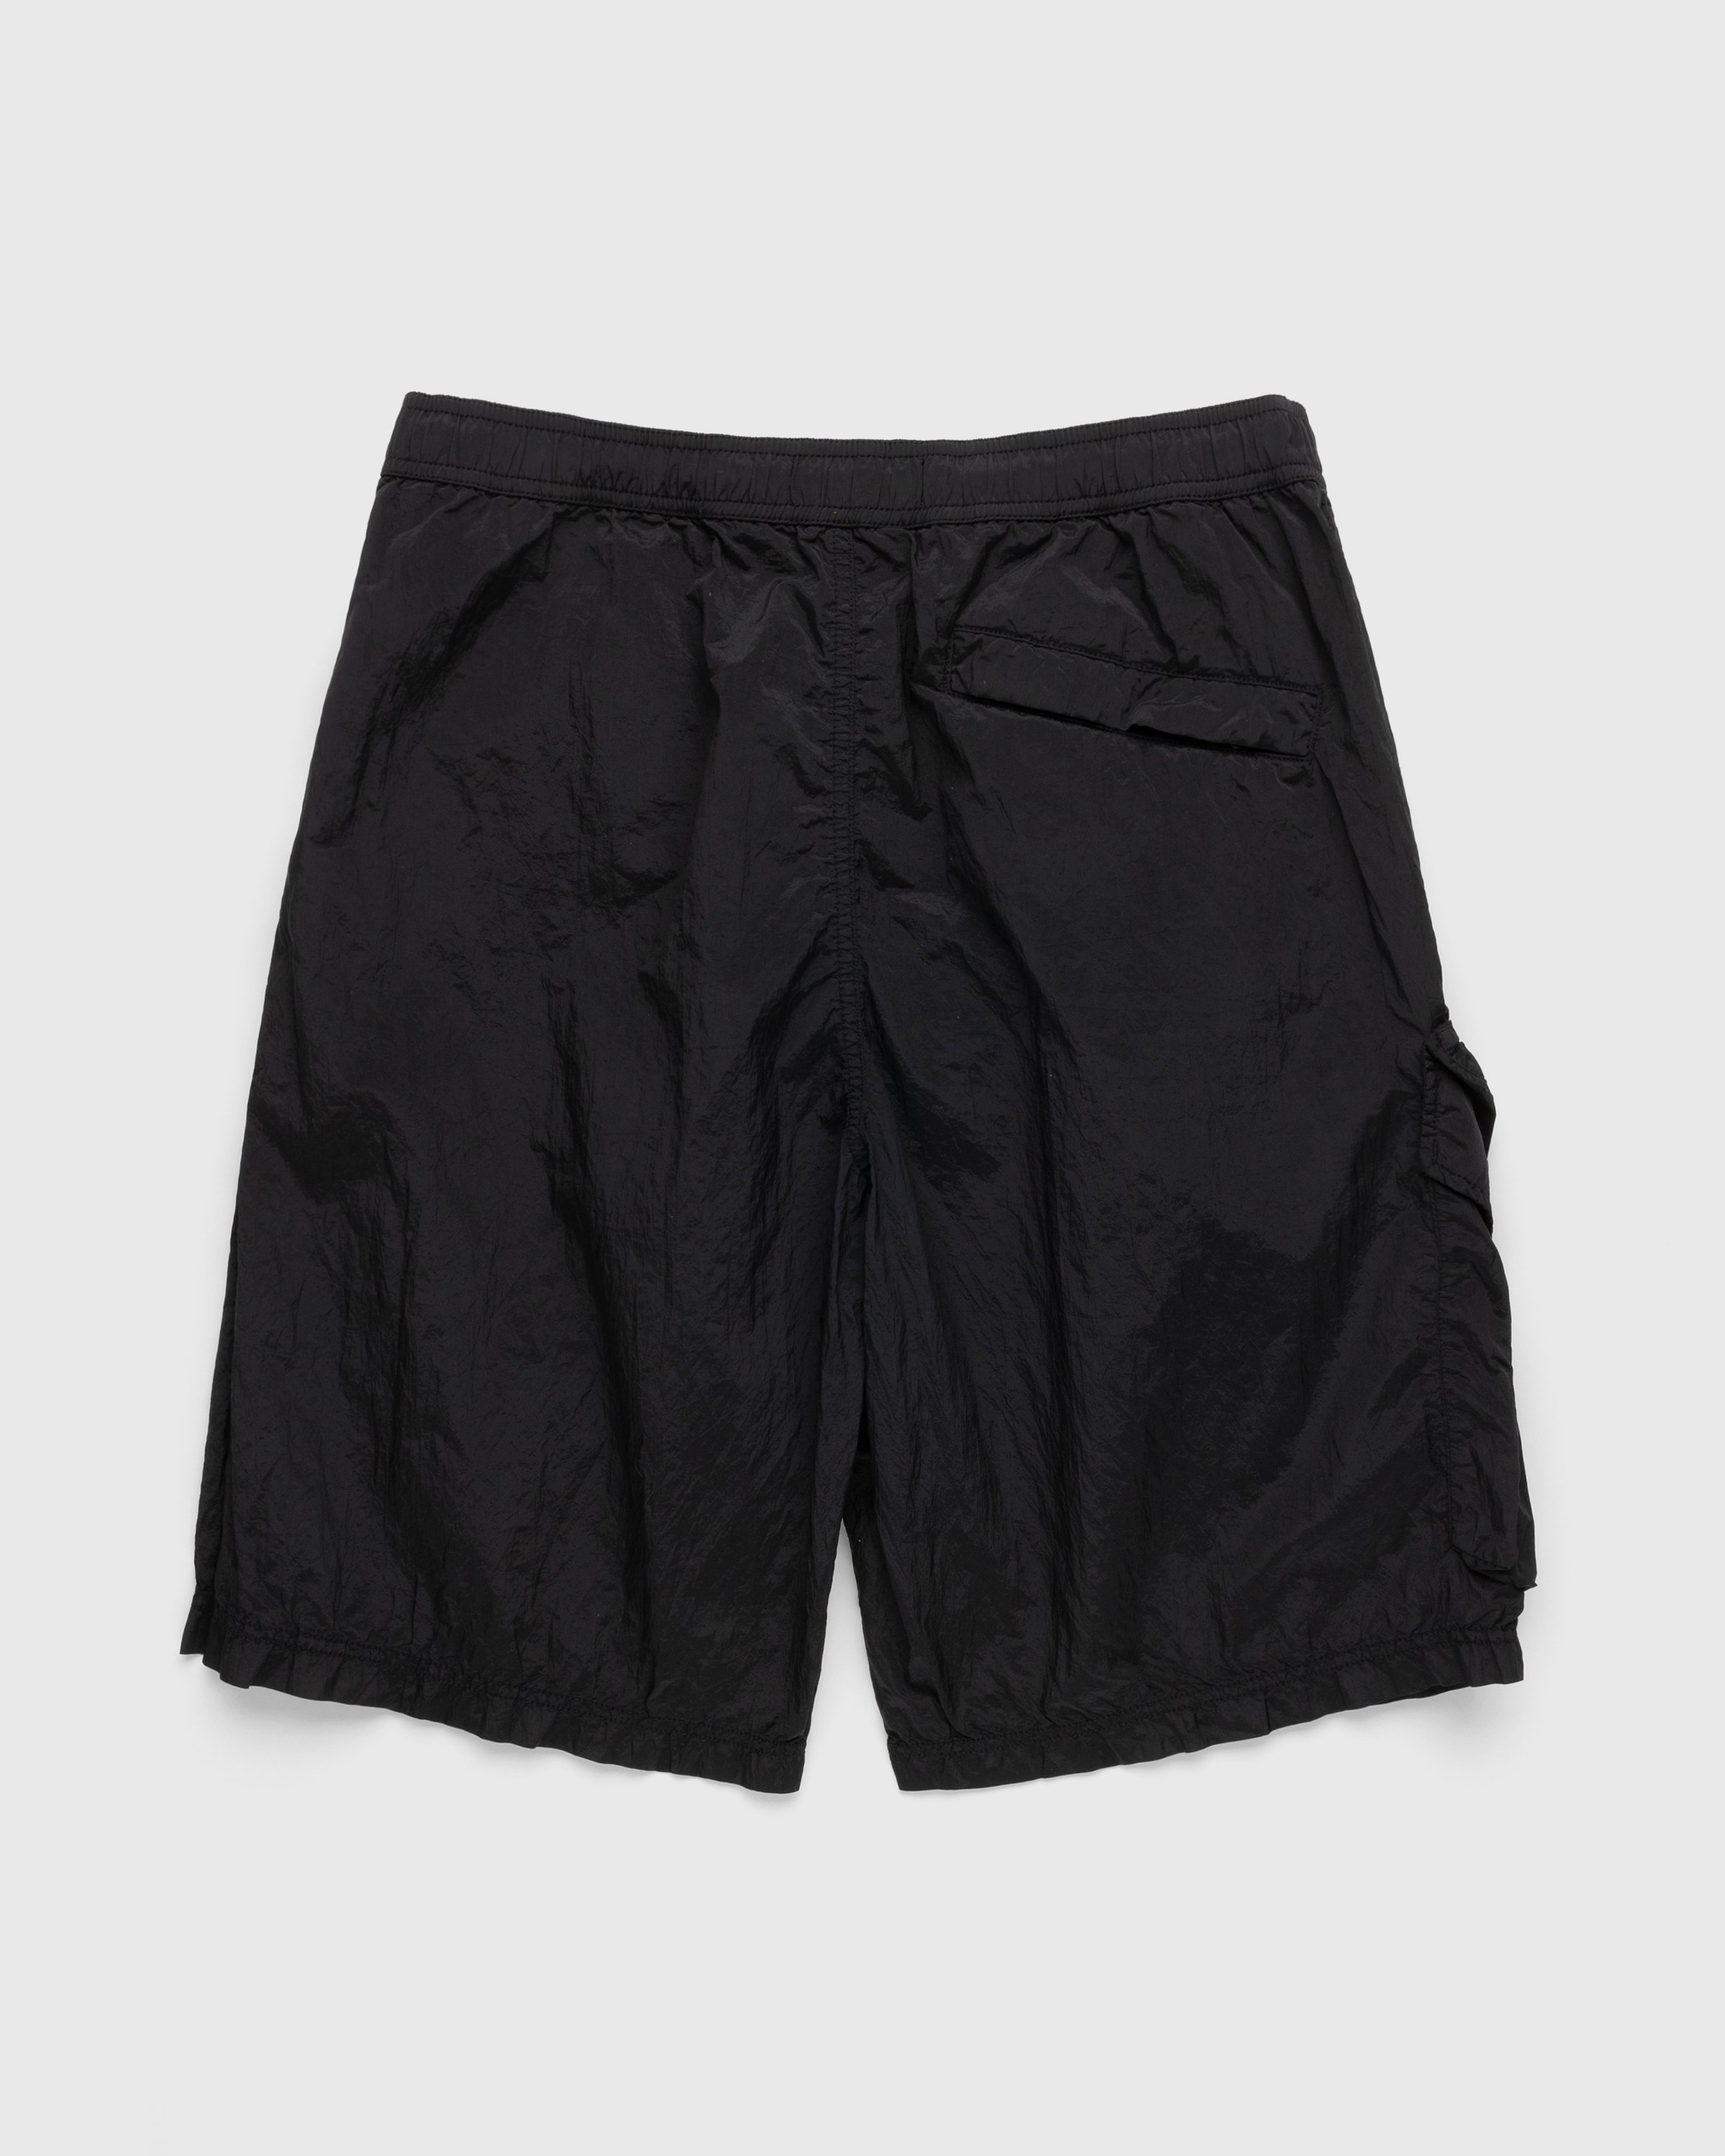 Stone Island - B0543 Nylon Metal Swim Shorts - Clothing - Black - Image 2